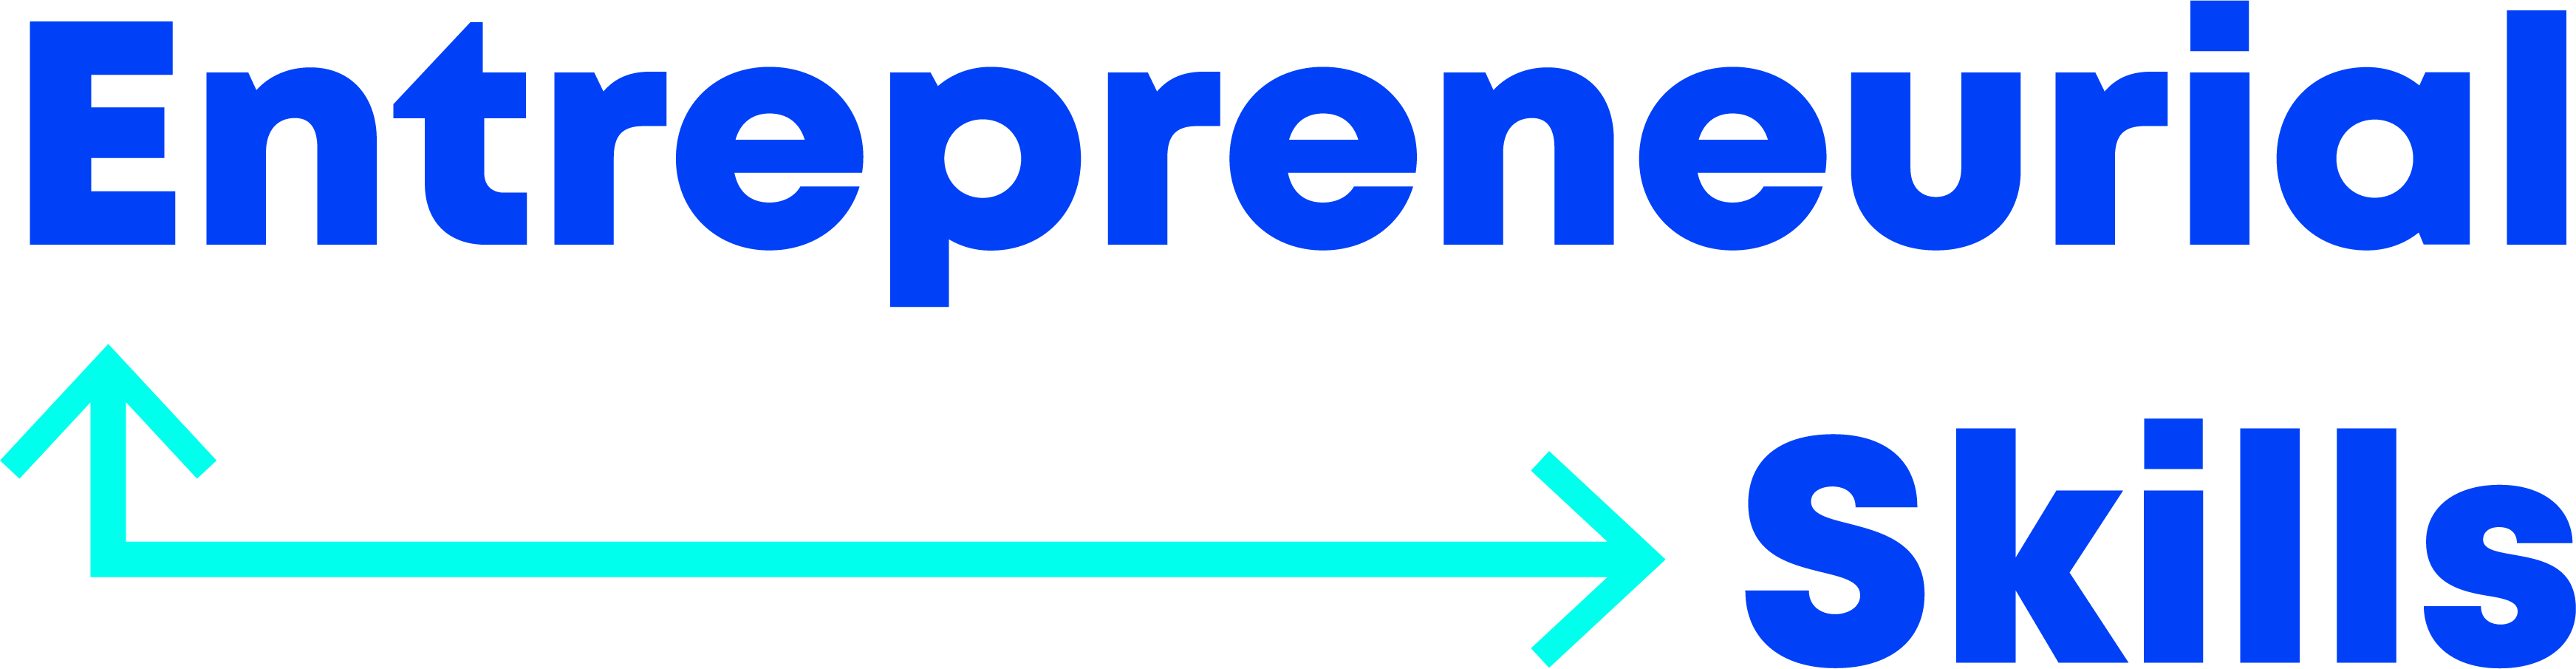 logo Digital technology for entrepreneurial skills in adult education